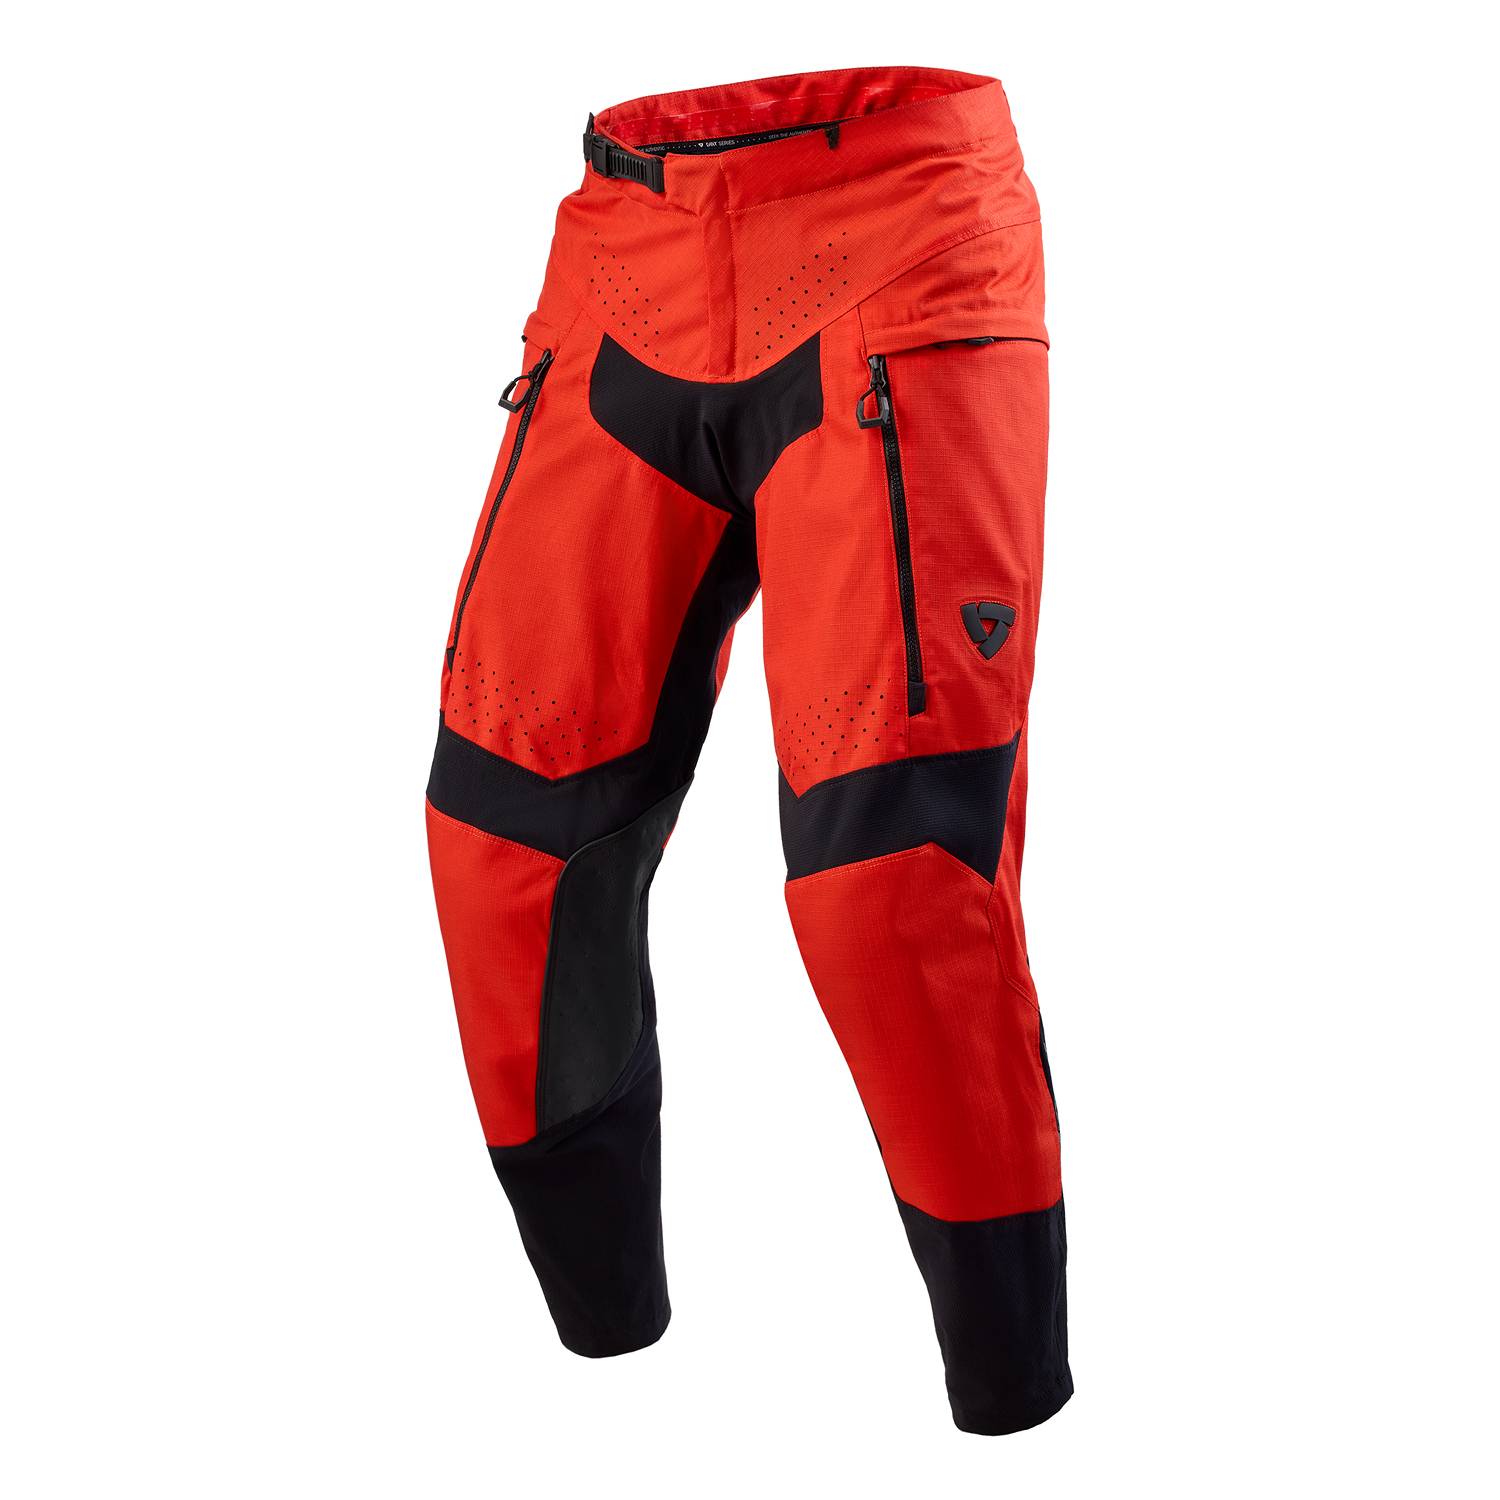 Image of REV'IT! Pants Peninsula Red Short Motorcycle Pants Size 2XL EN